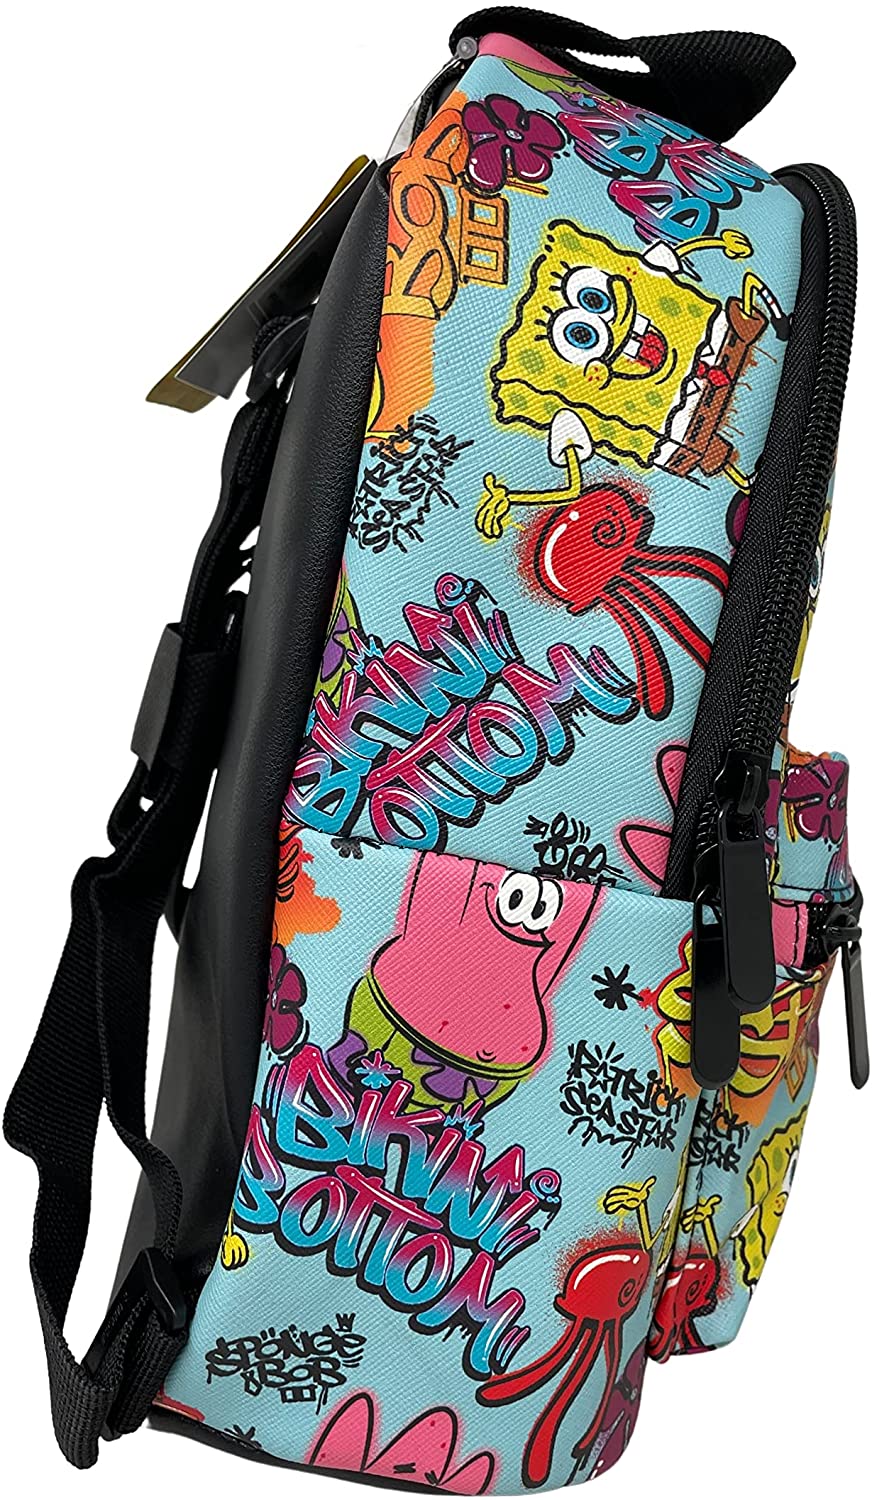 Spongebob Squarepants Deluxe Small Allover Print 10" Backpack - GTE Zone